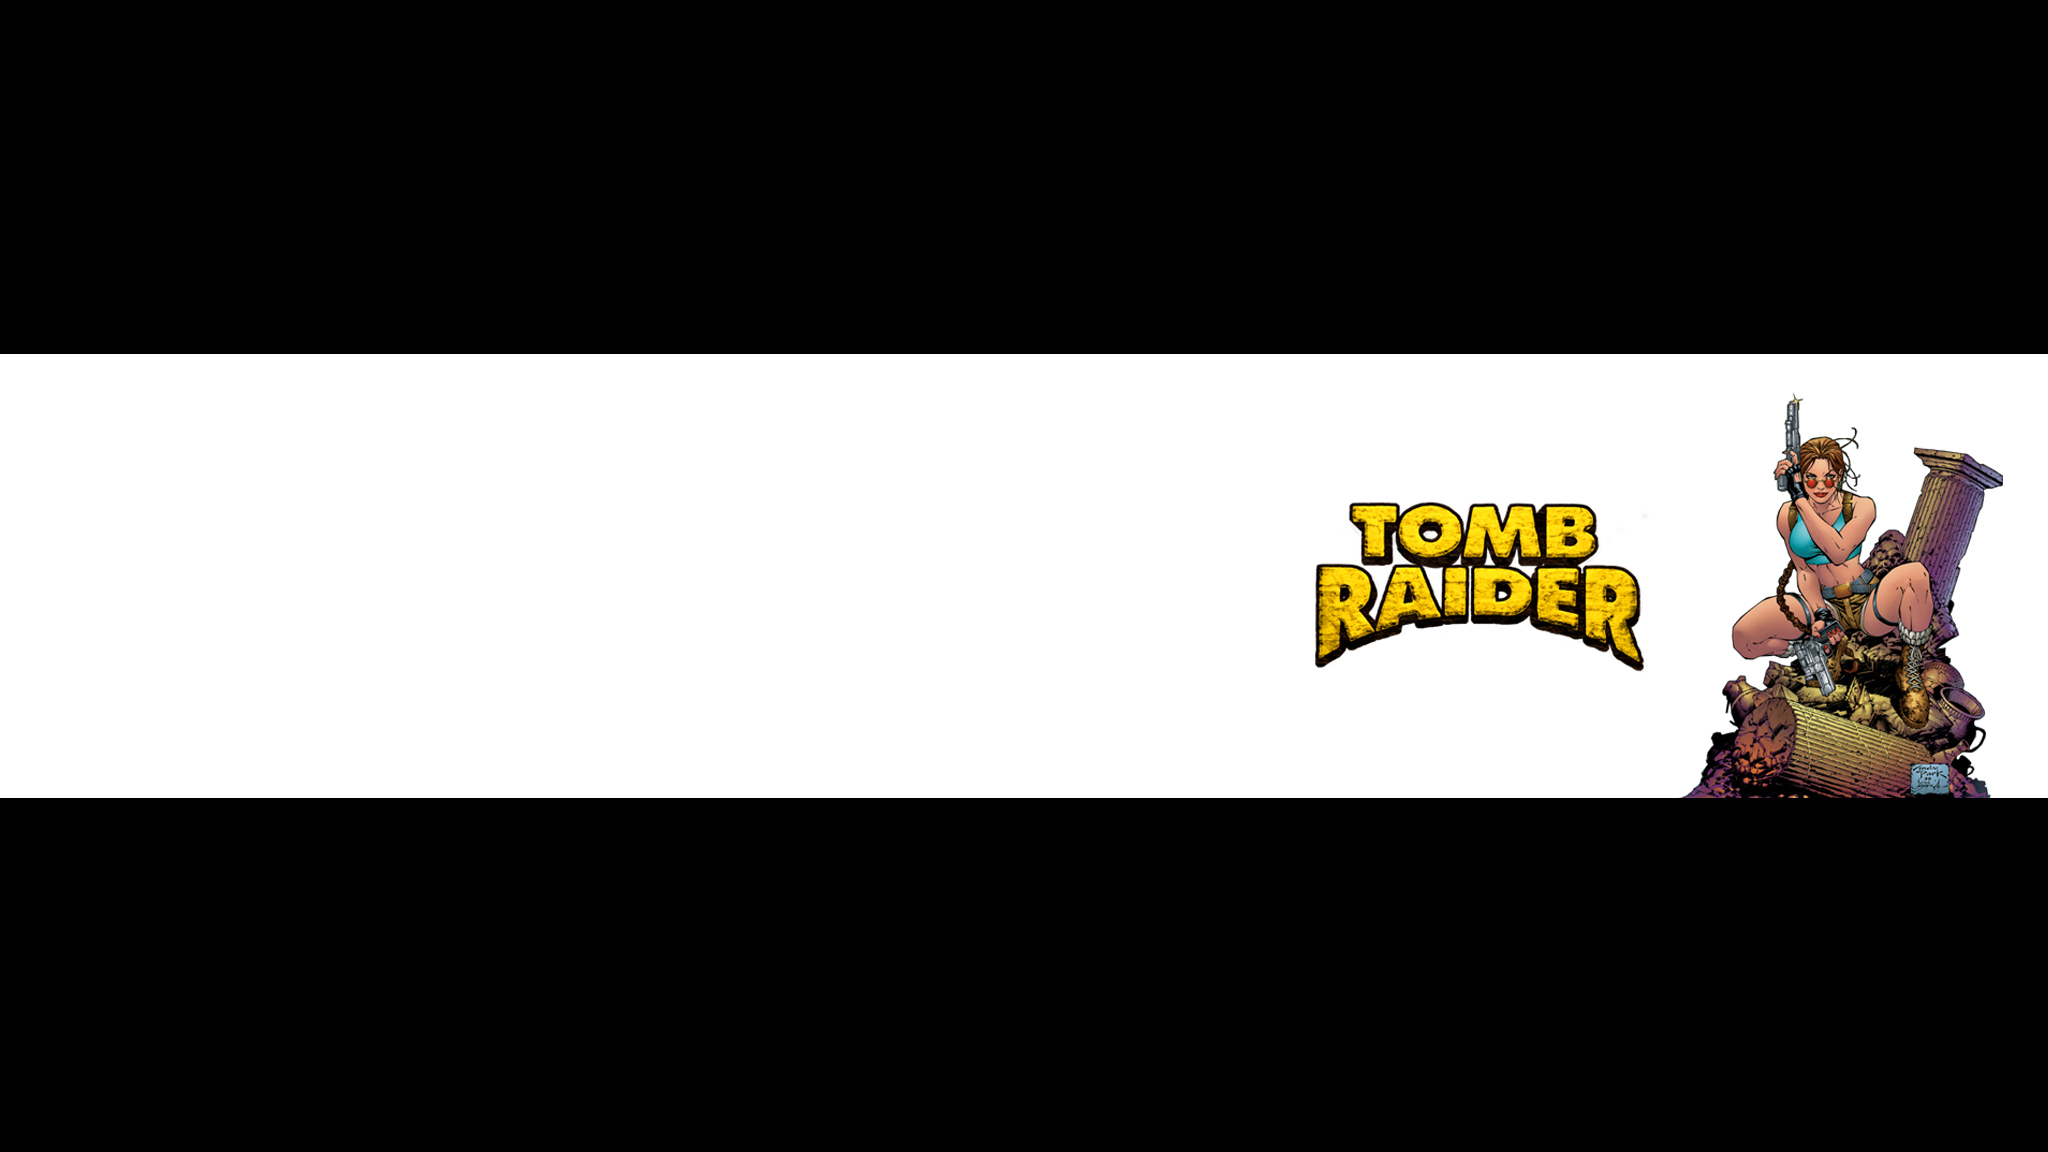 Tomb Raider Comics Andy Park YouTube Banner.jpg